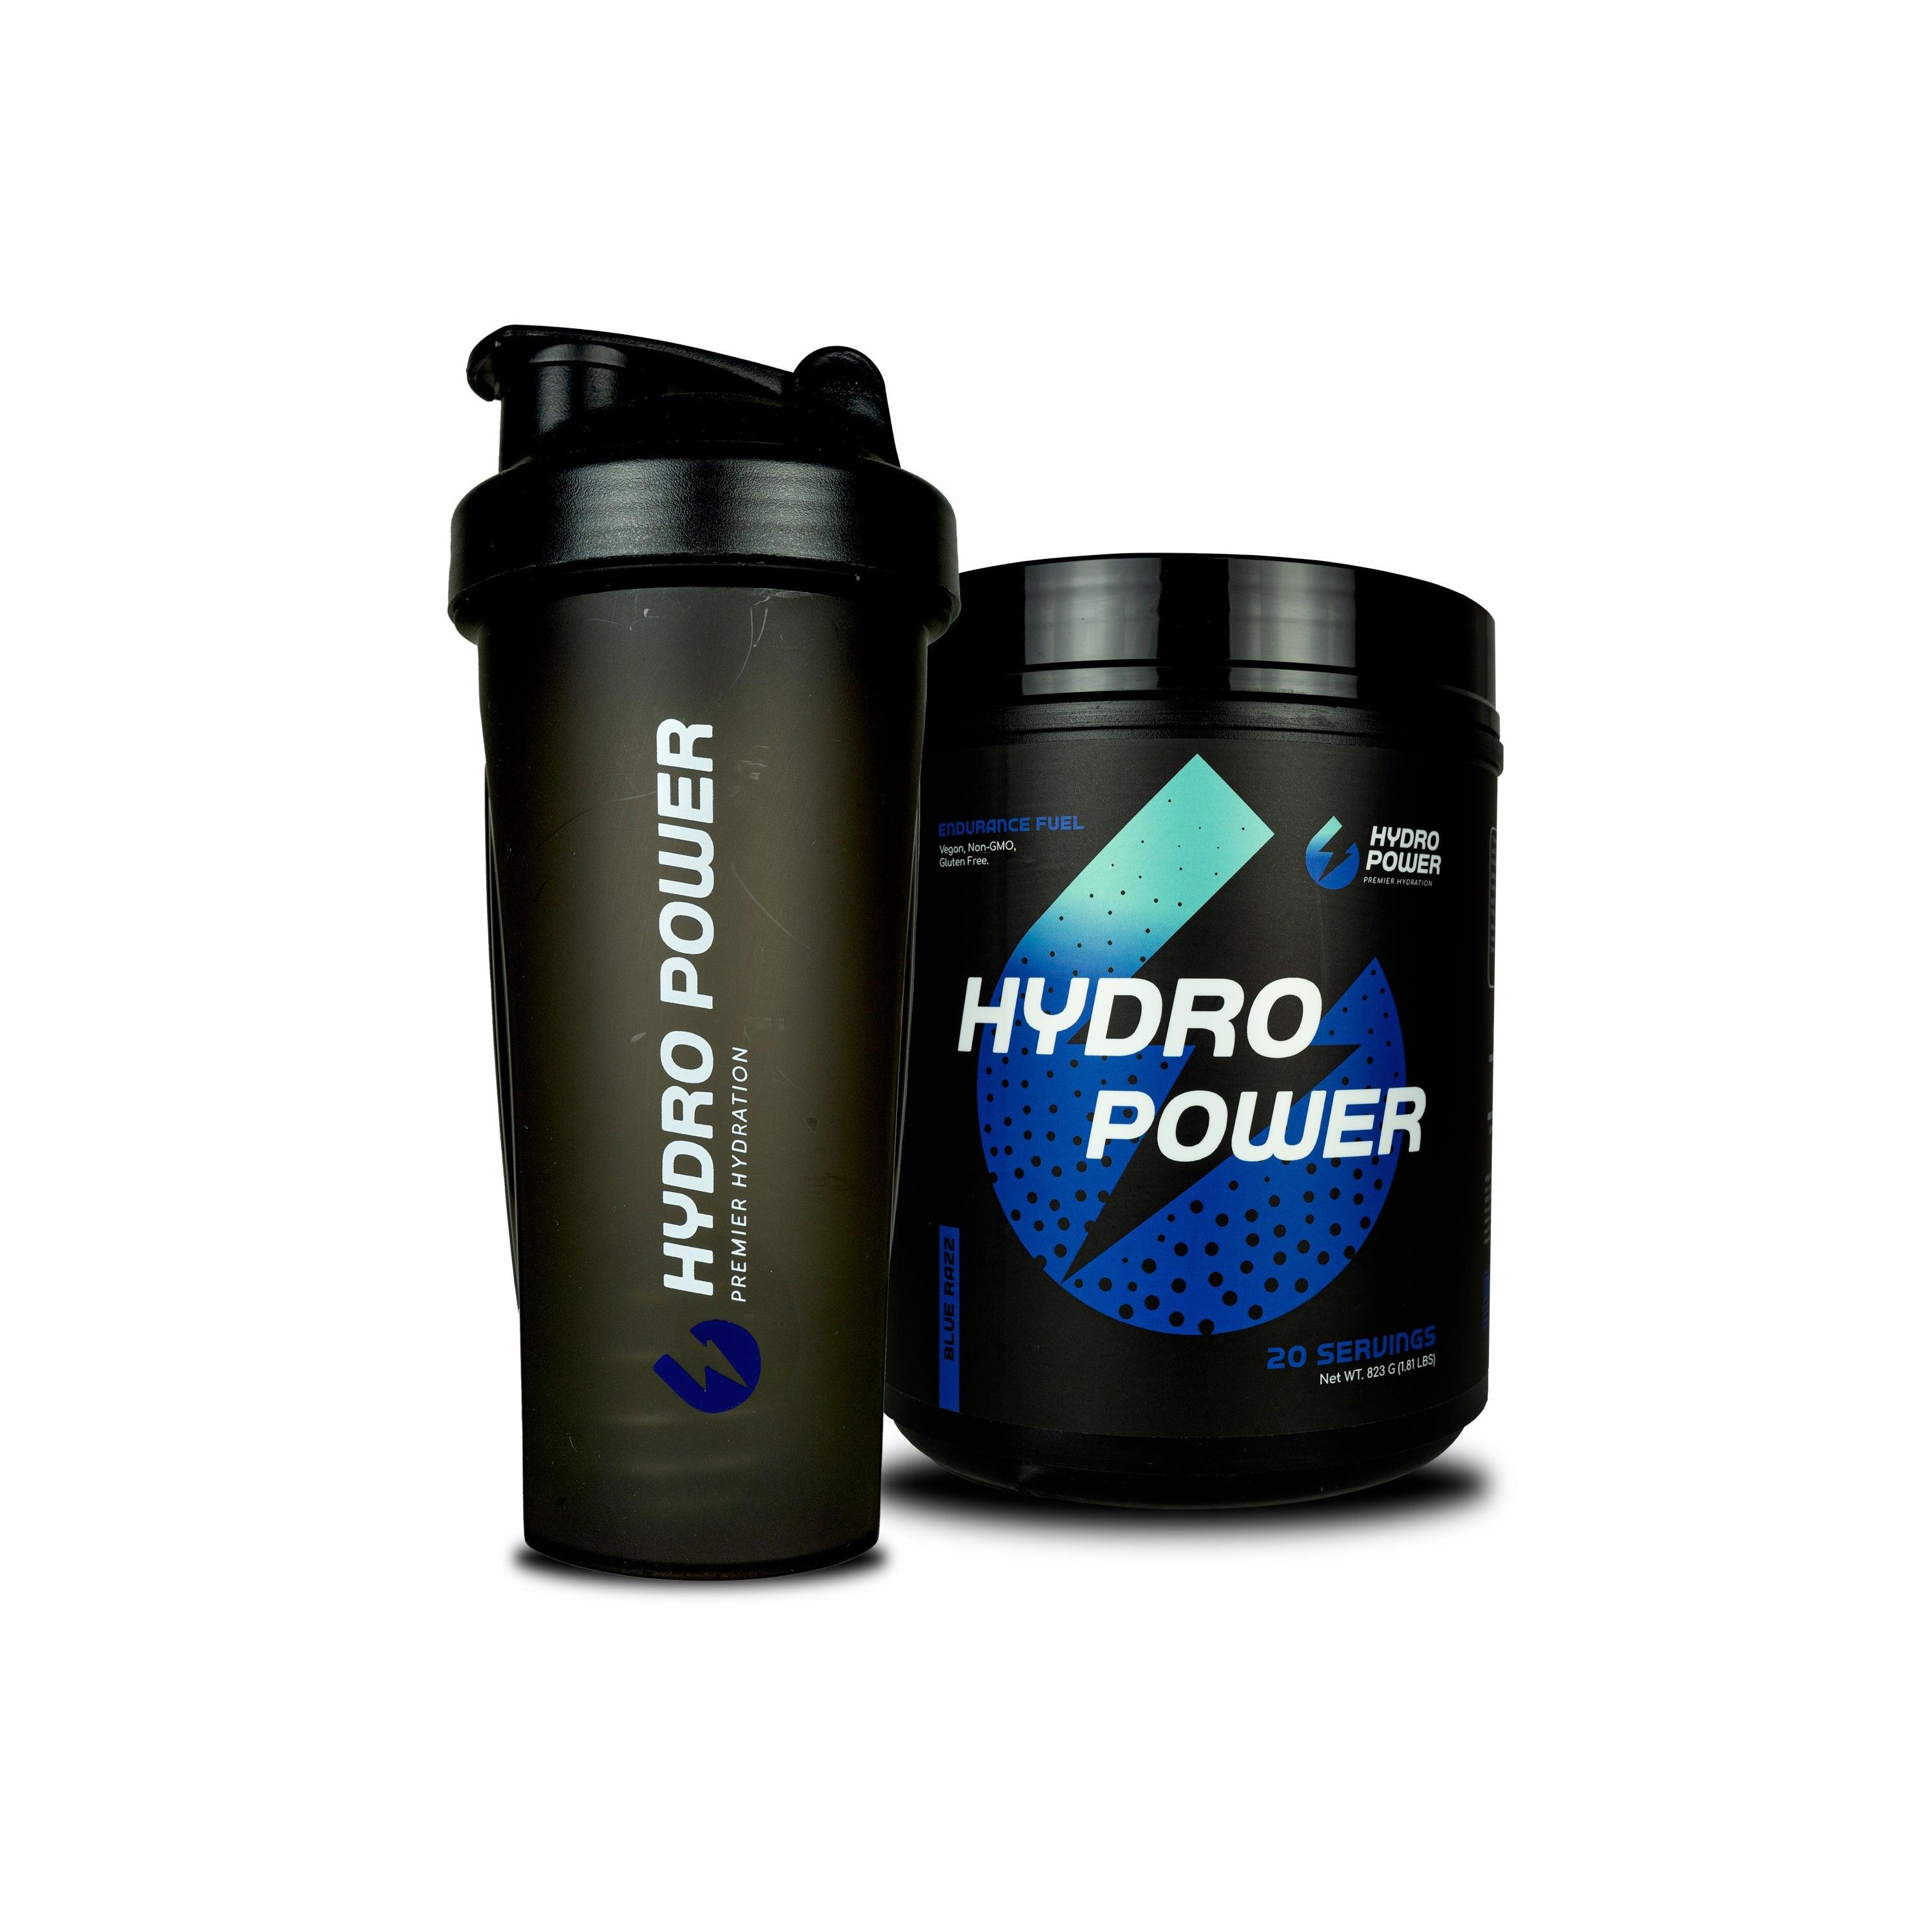 Hydro Power Jar + Bottle Bundle Hydro Power